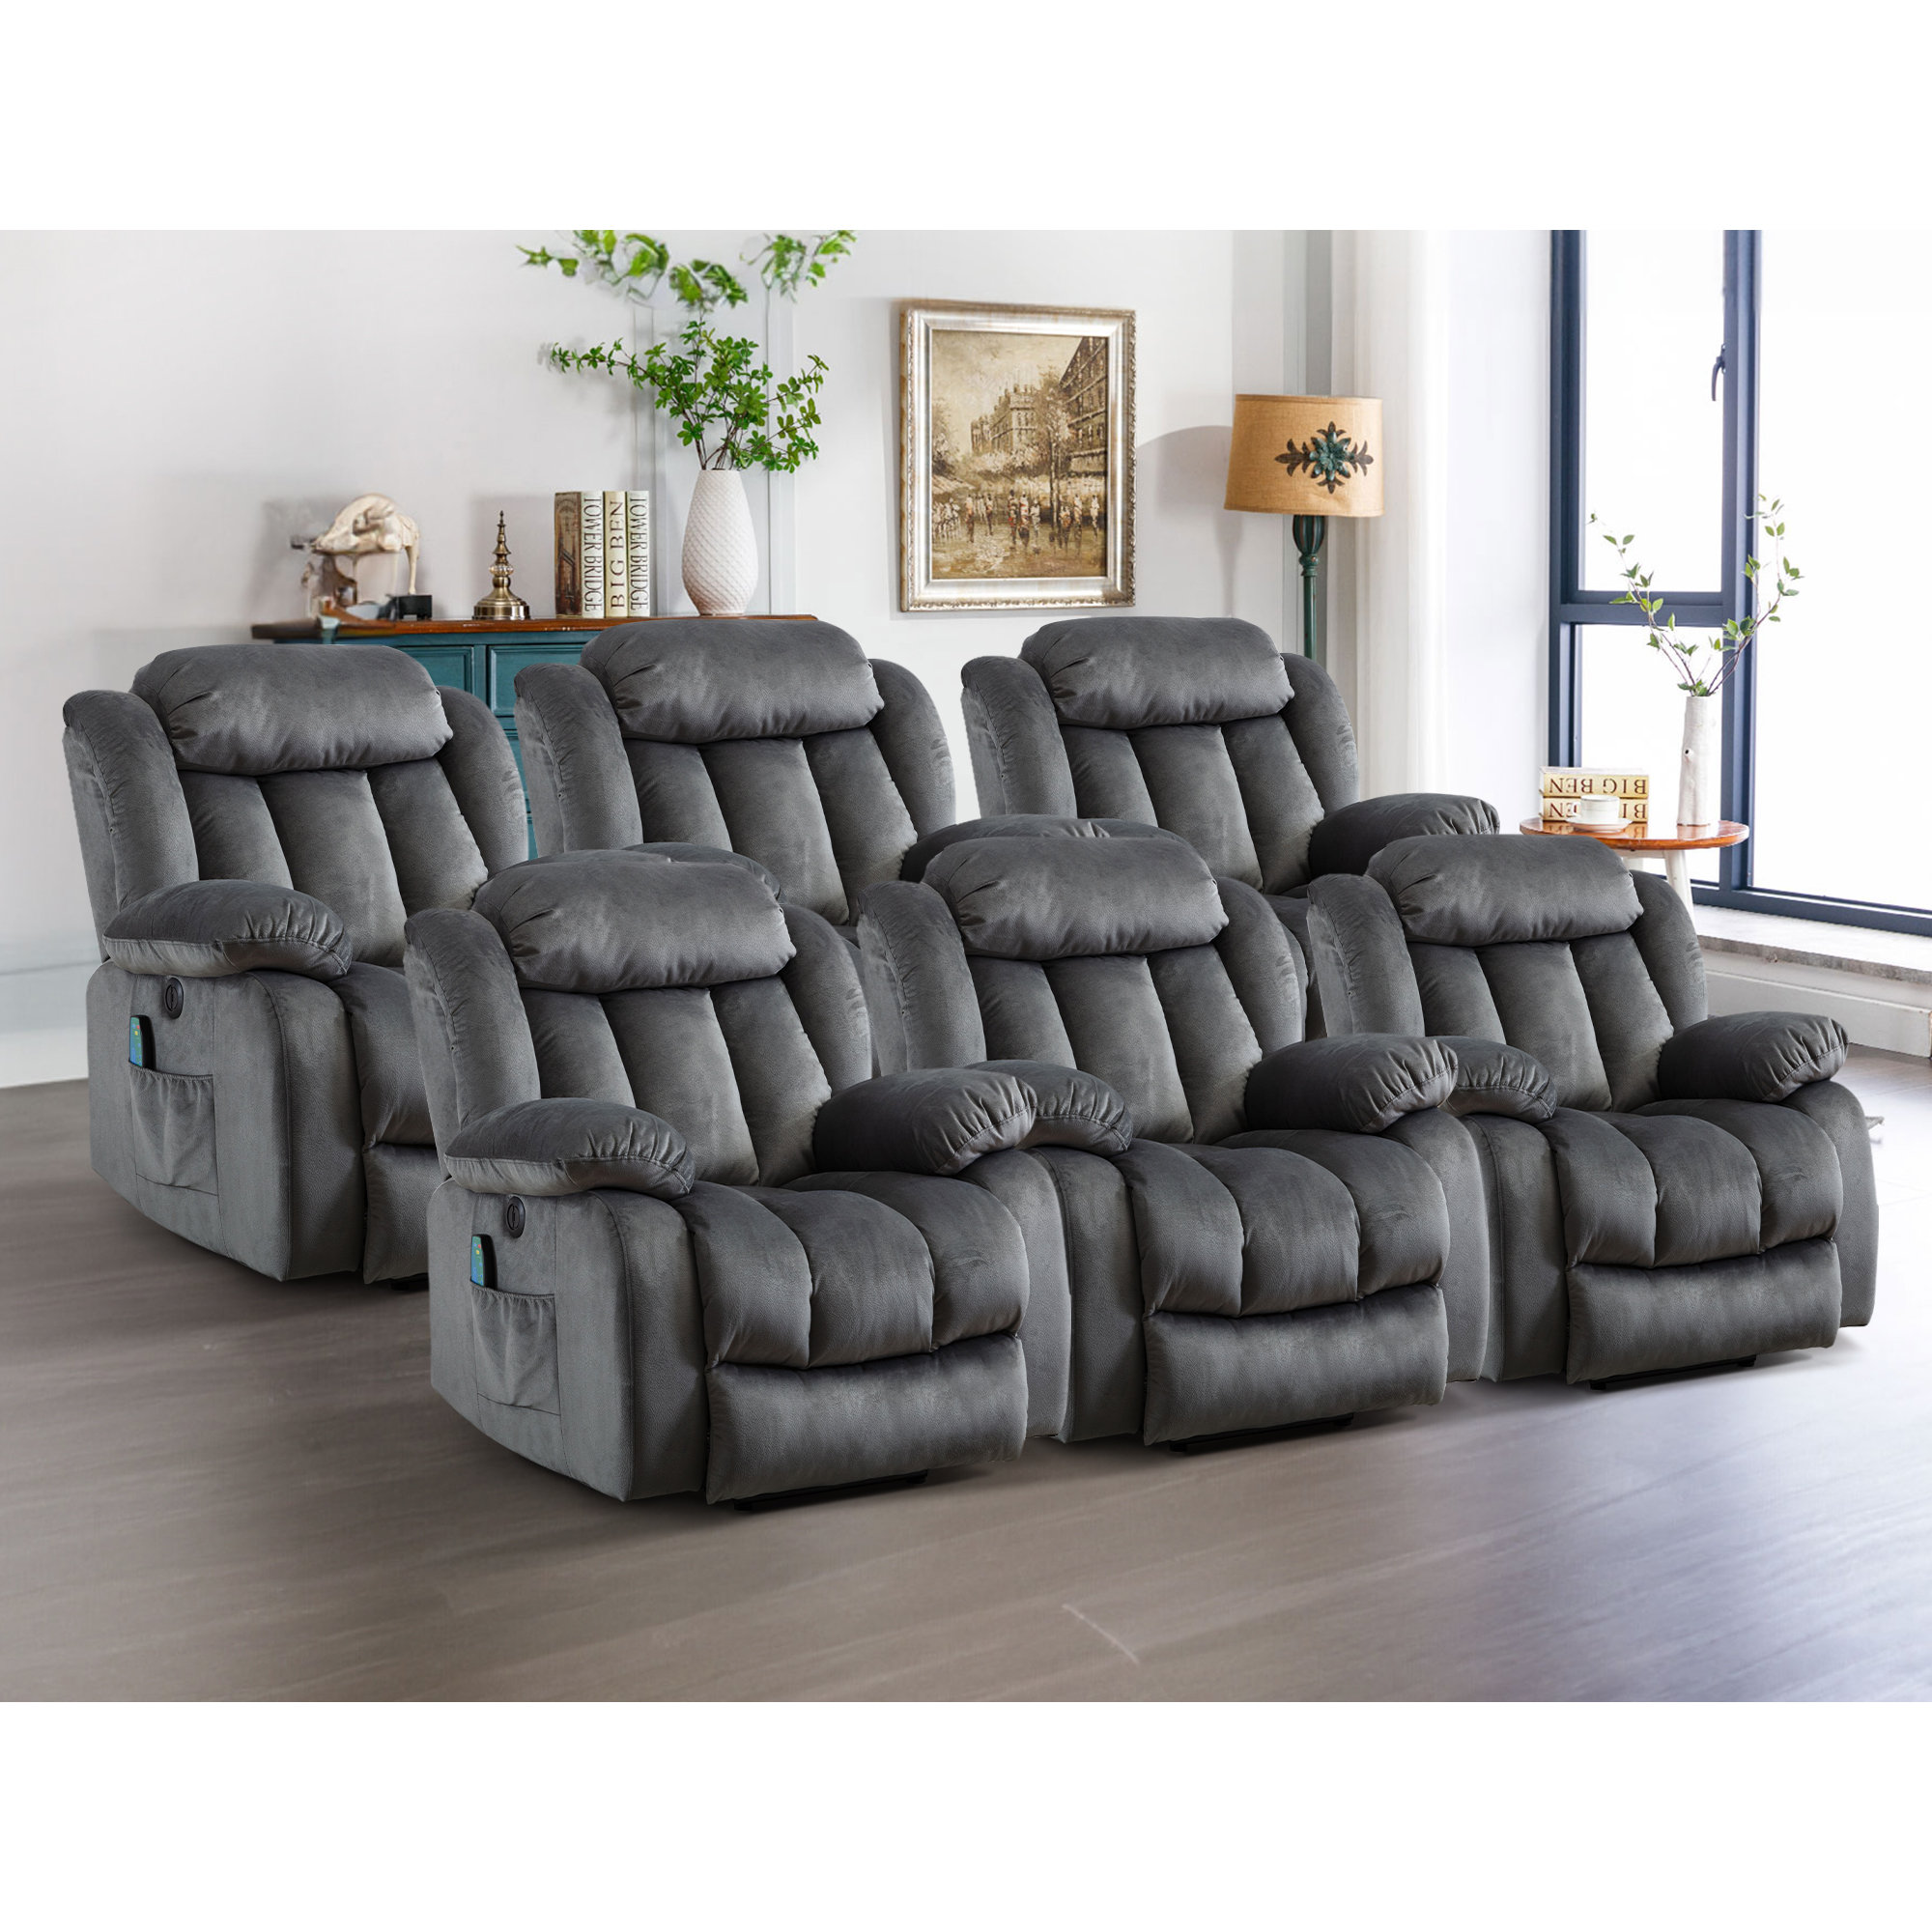 Bonzy Home 39.4 Wide Power Lift Recliner Chair Massage Seating Set